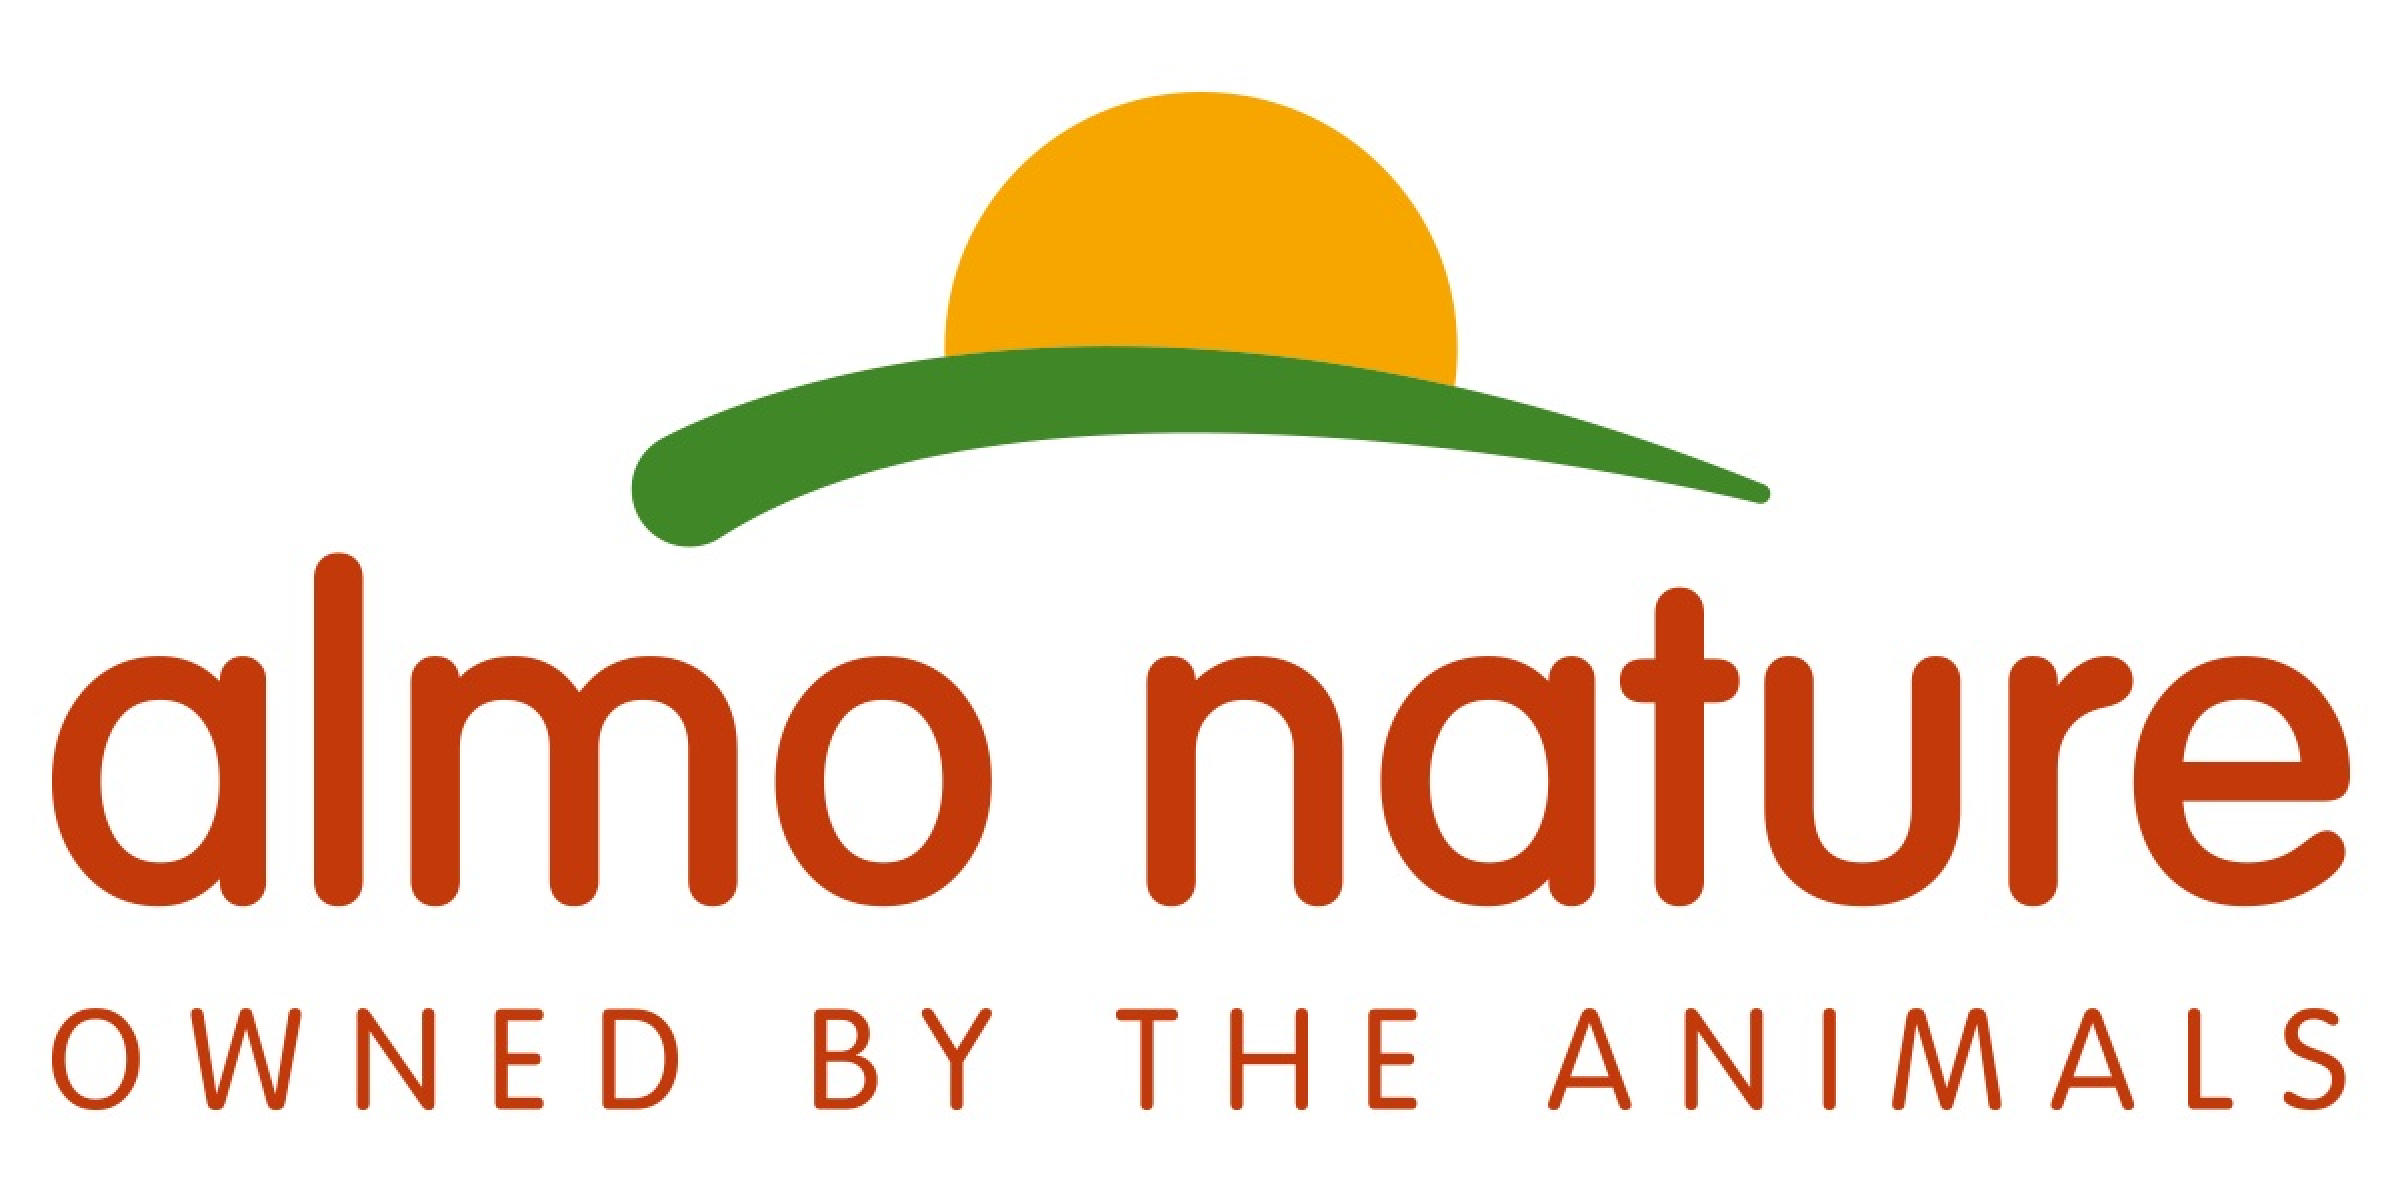 Корм для собак almo. Альмо натюр. Almo nature логотип. Almo nature баннер. Альмо натюр корм для собак.